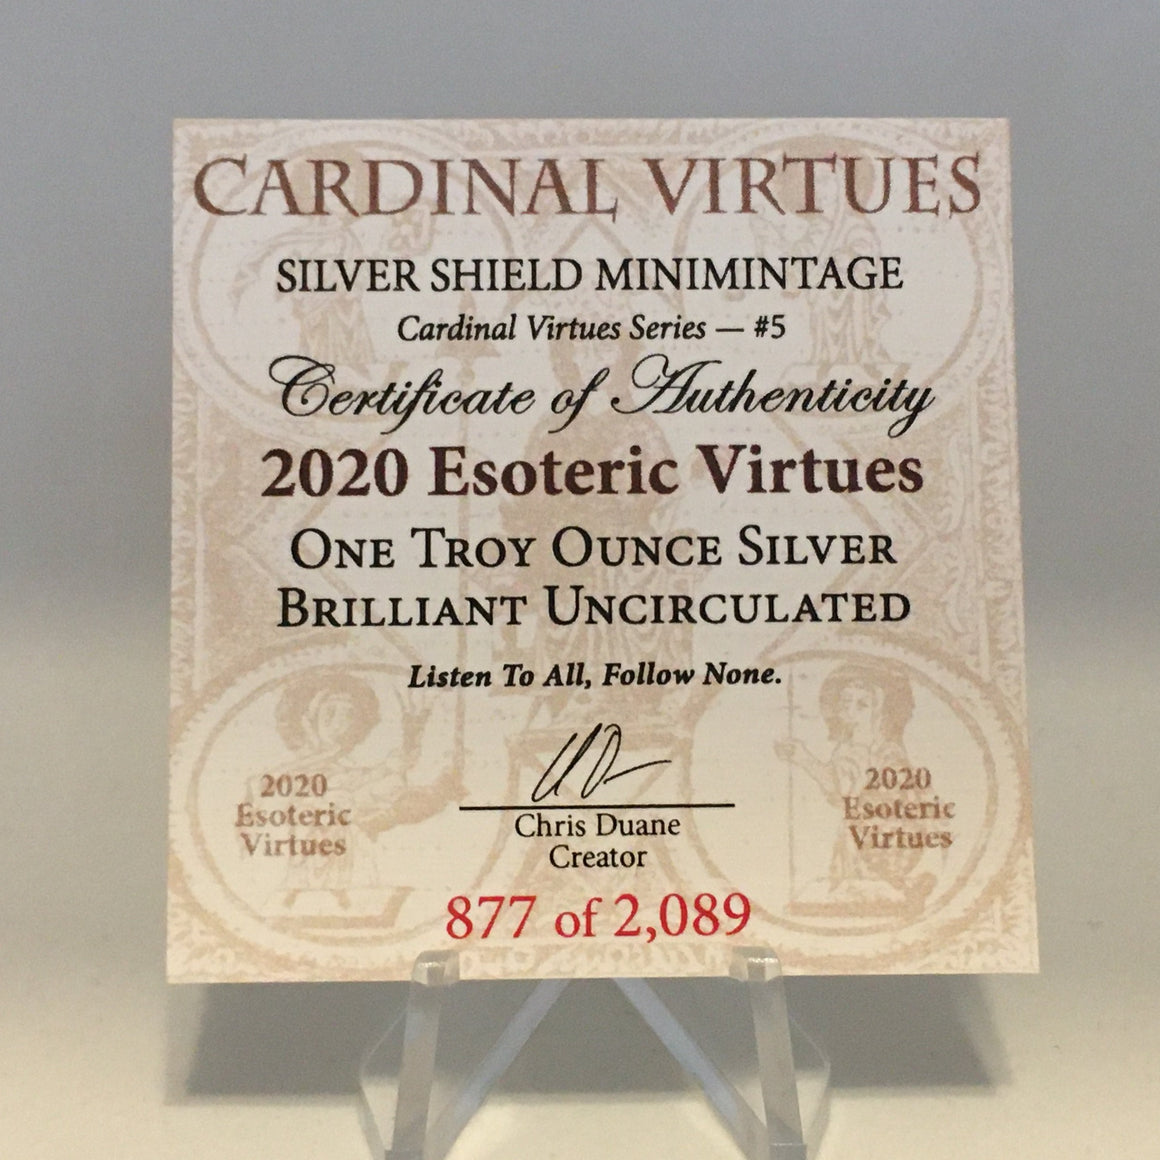 2020 Esoteric Virtues by Silver Shield, Mini Mintage - BU 1 oz .999 Silver Round